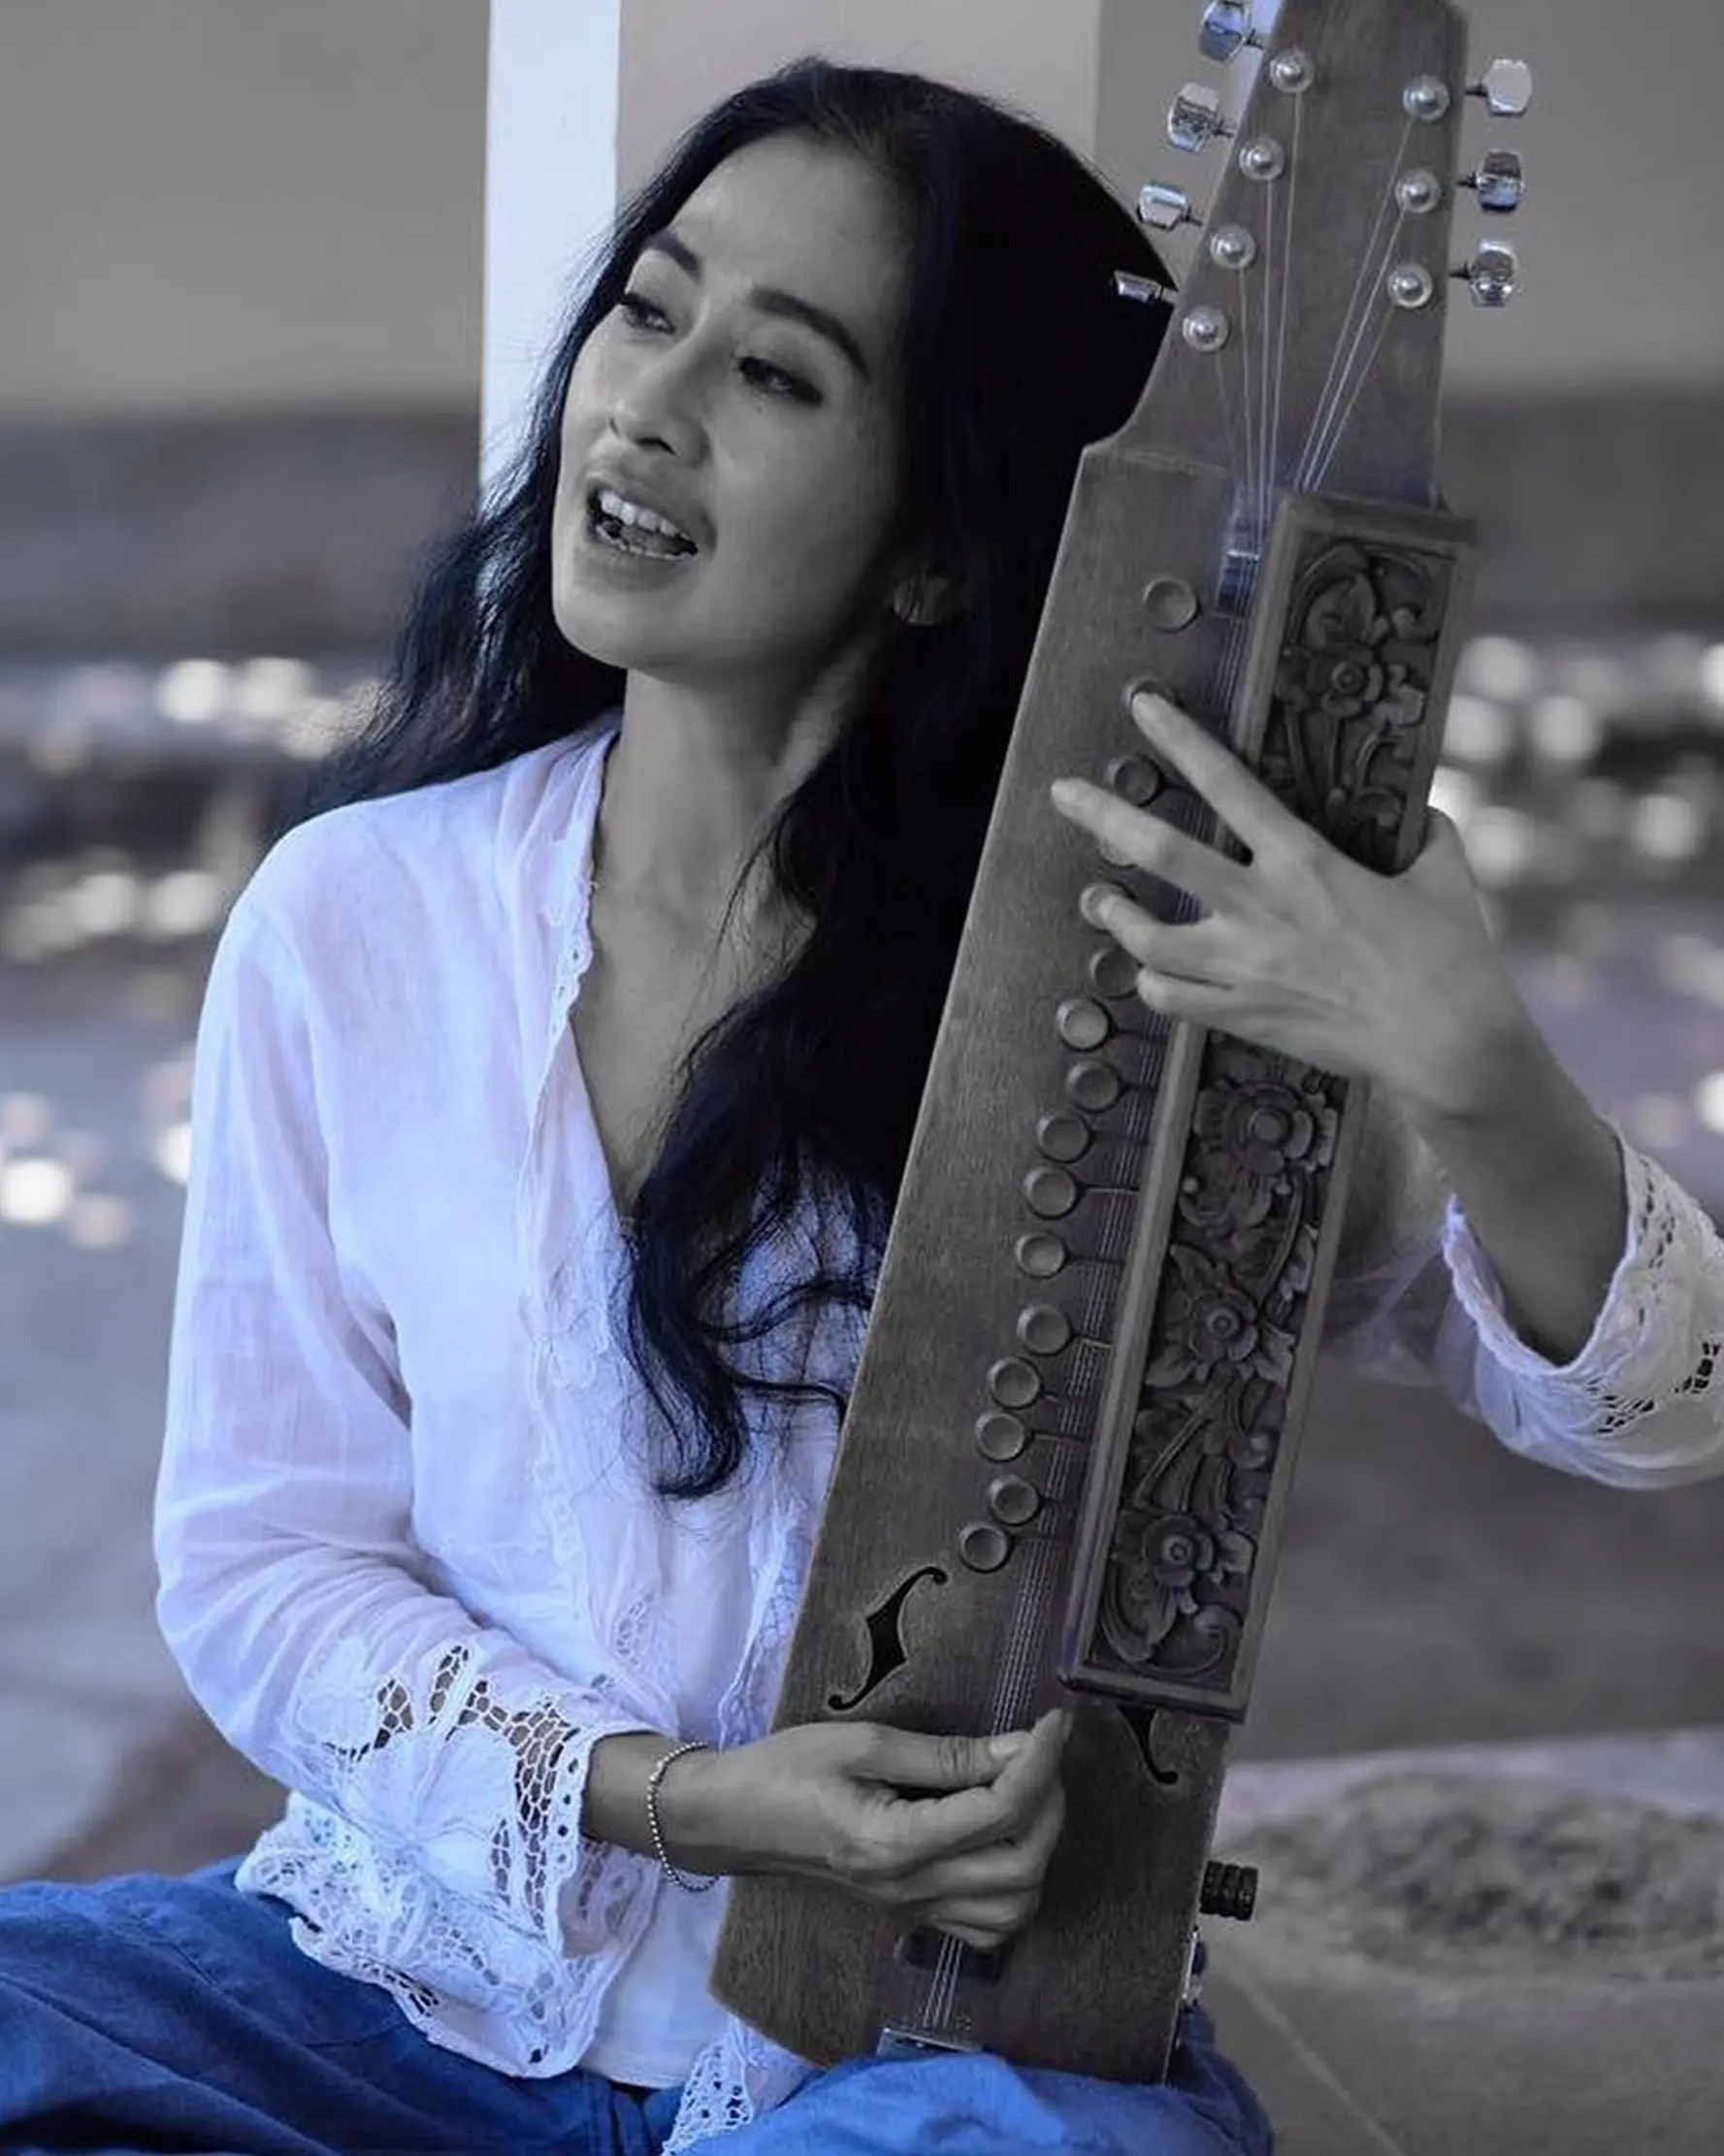 Aktris Ayu Laksmi berpose sambil memegang alat musik. Dalam dunia musik, Ayu Laksmi membentuk grup musik bernama Svara Semesta yang sering tampil di Bali. (instagram/ayulaksmibali)